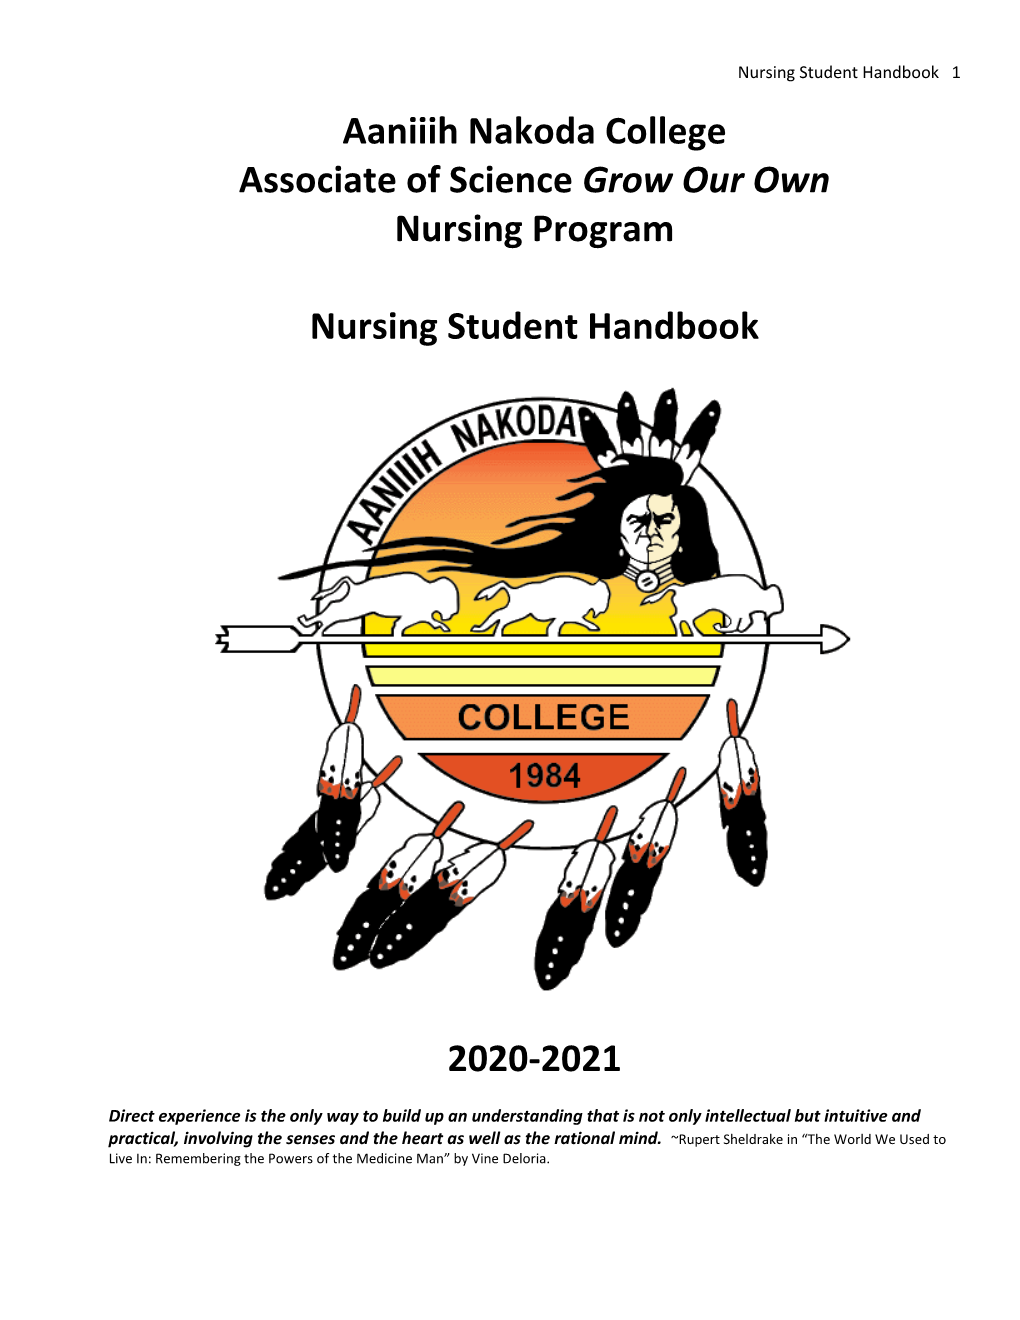 Aaniiih Nakoda College Associate of Science Grow Our Own Nursing Program